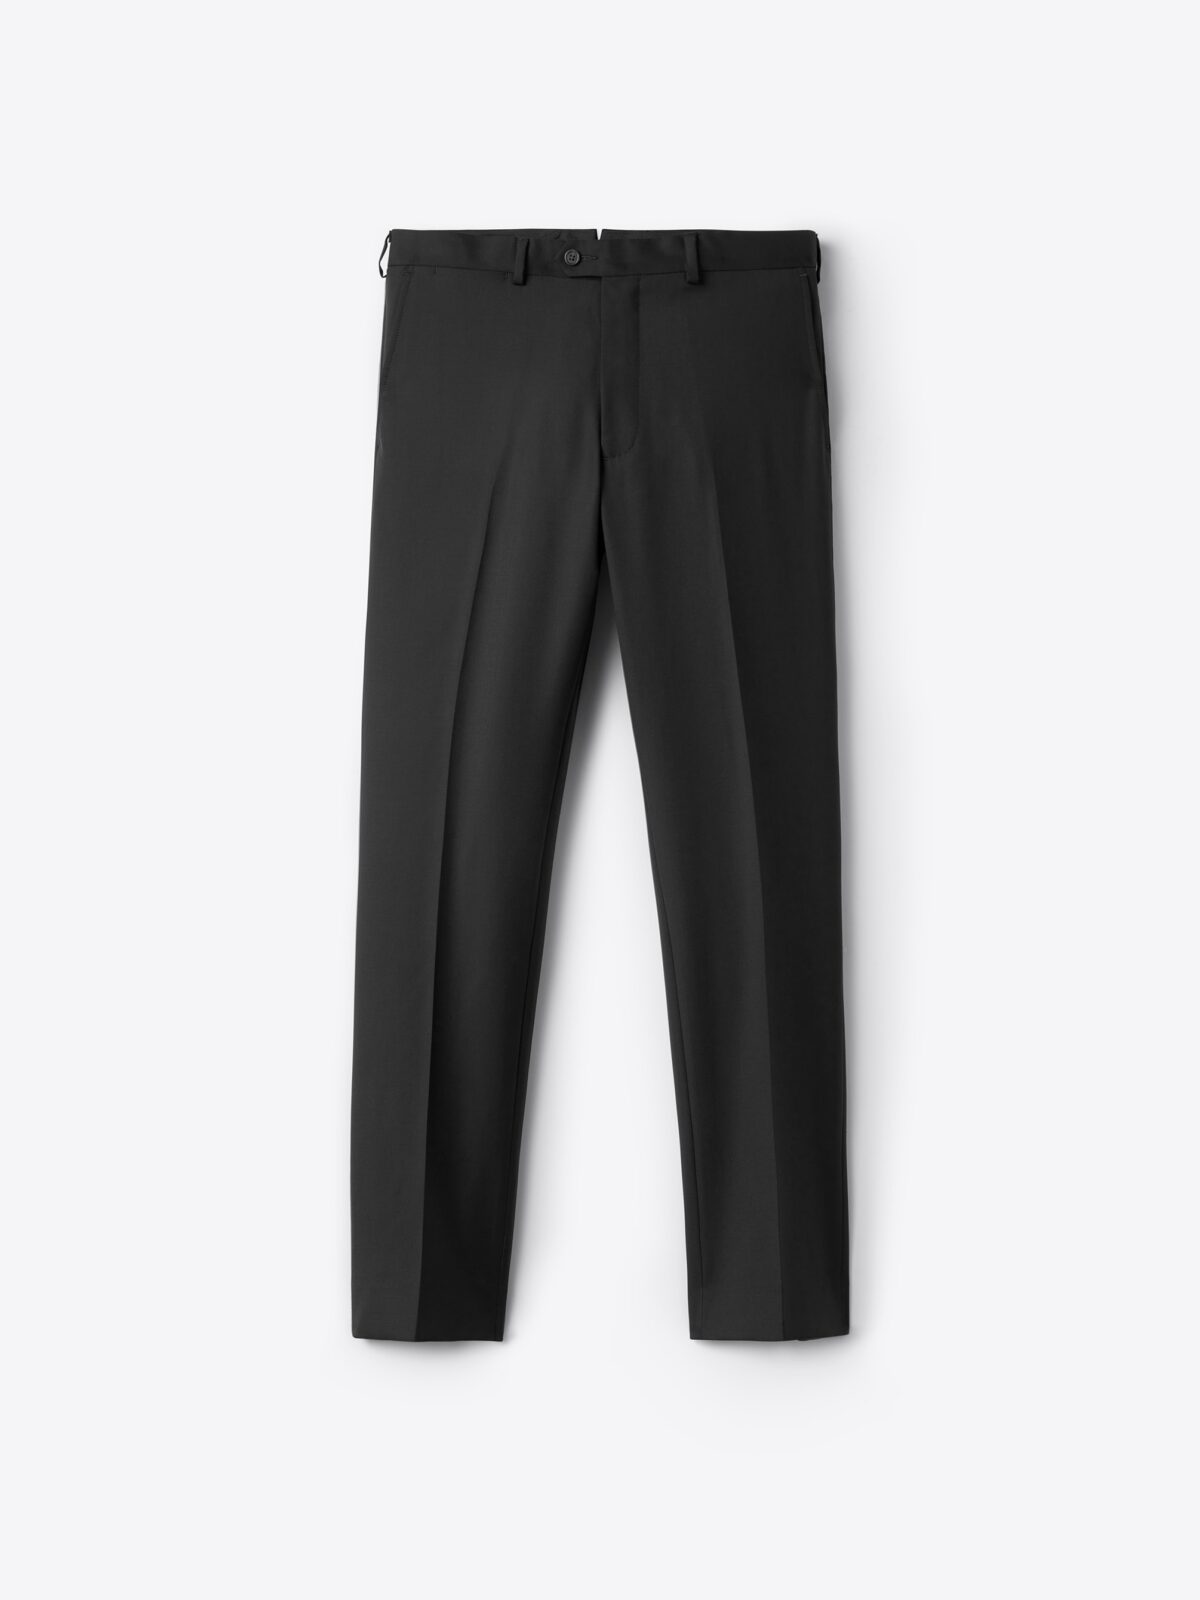 VBC Black S110s Wool Dress Pant - Custom Fit Tailored Clothing